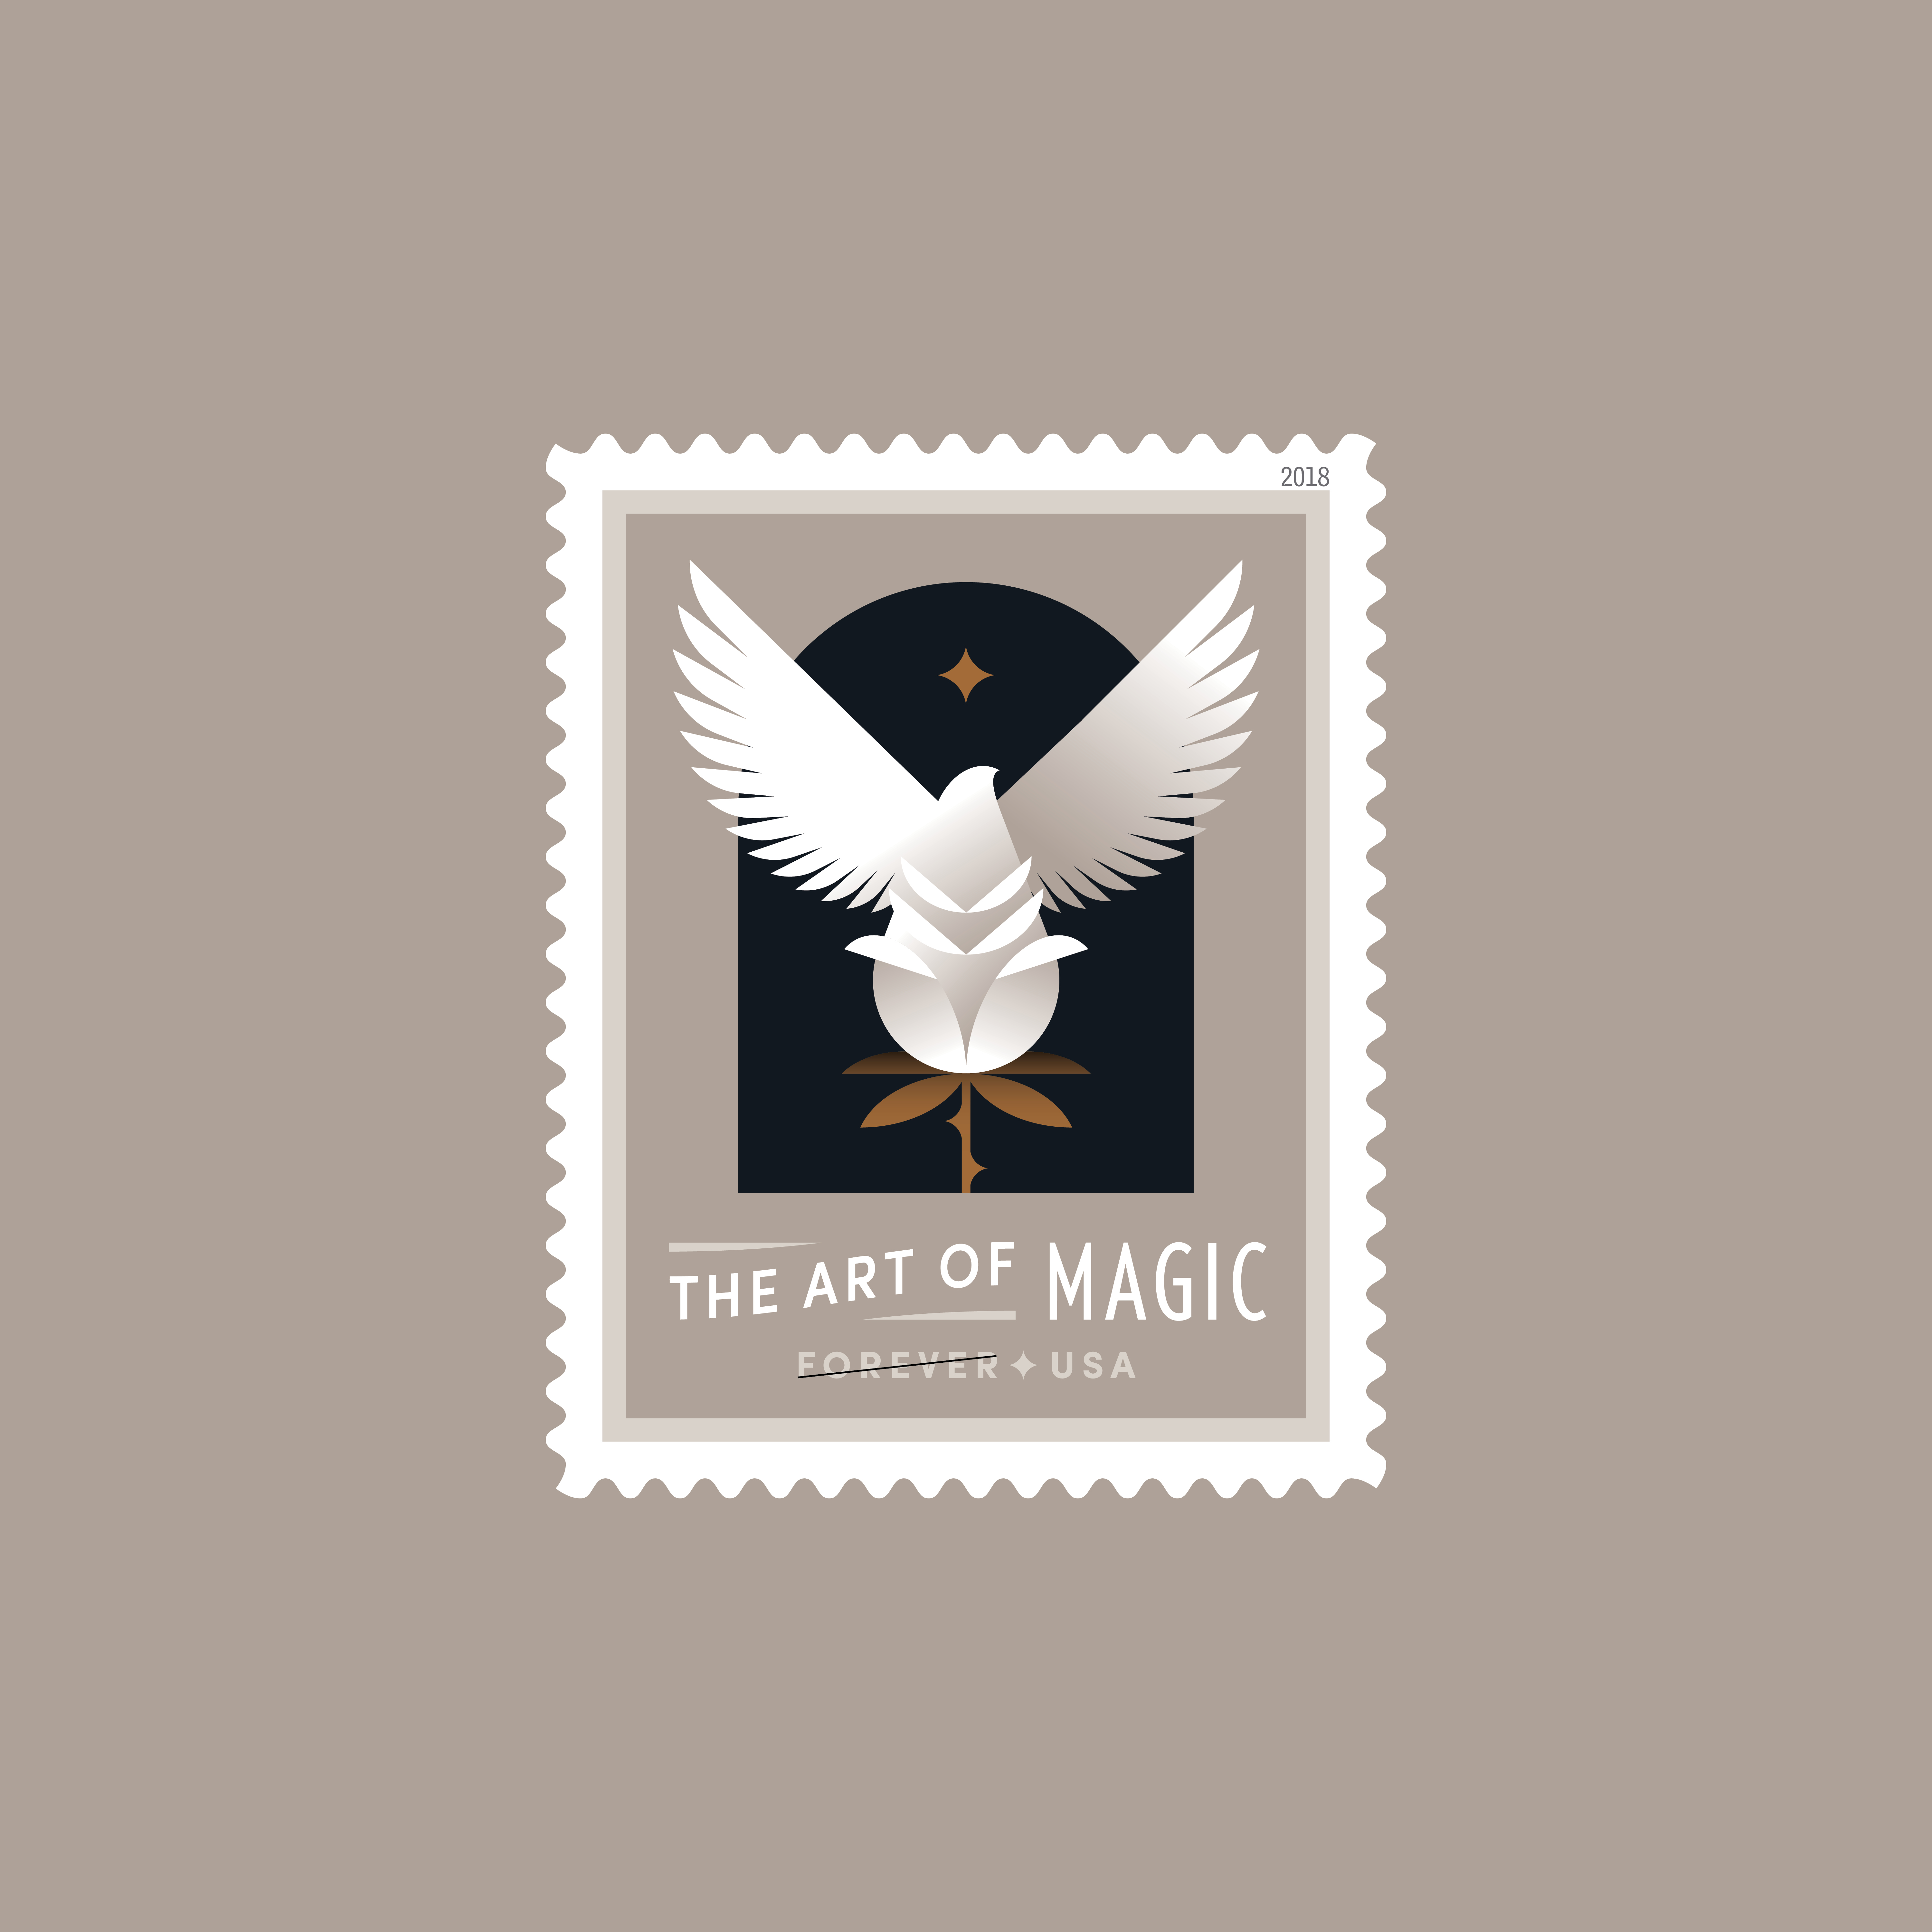 Art of Magic stamp